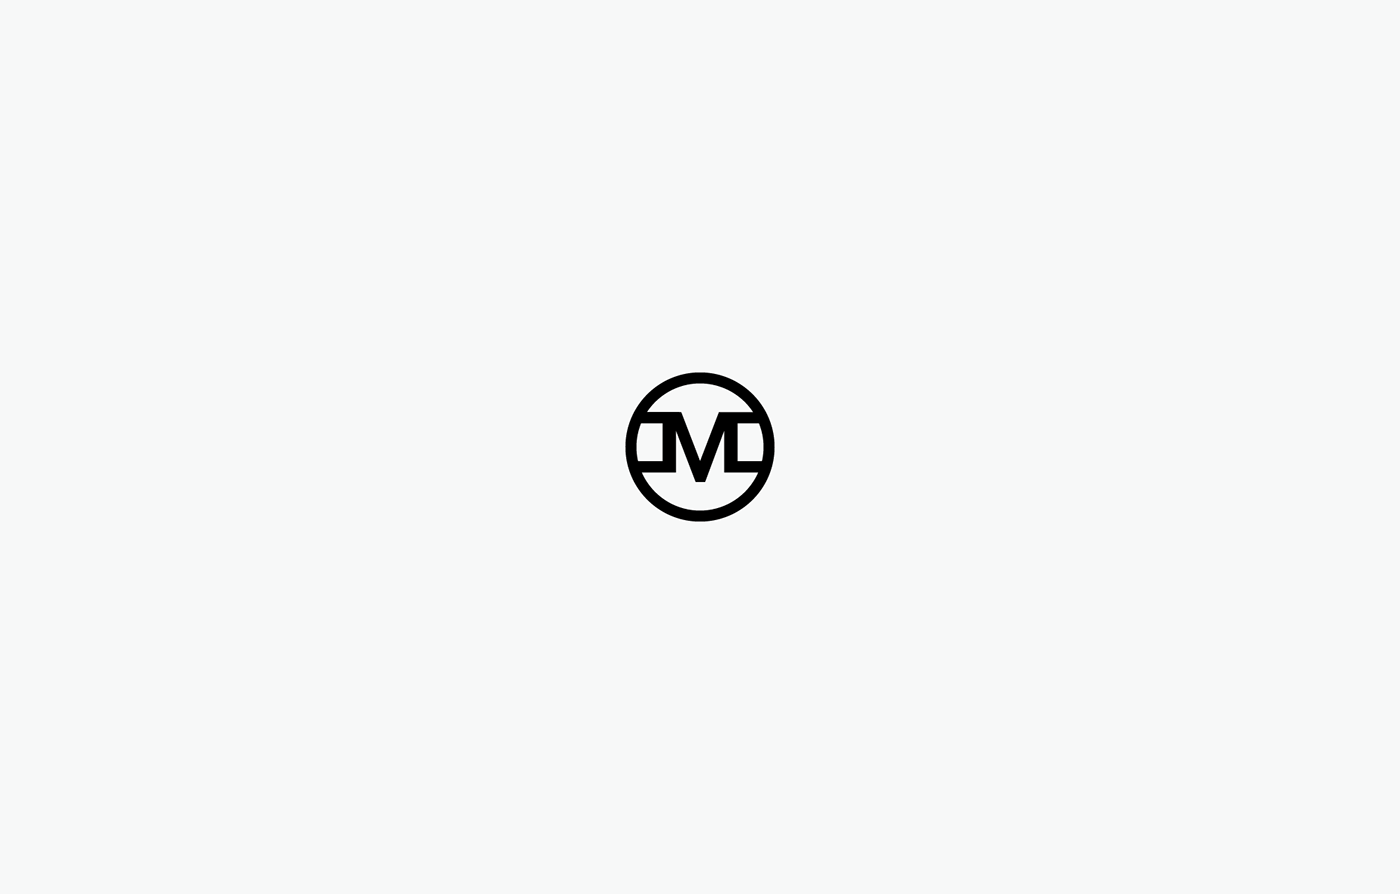 Logotype logo symbols monogram